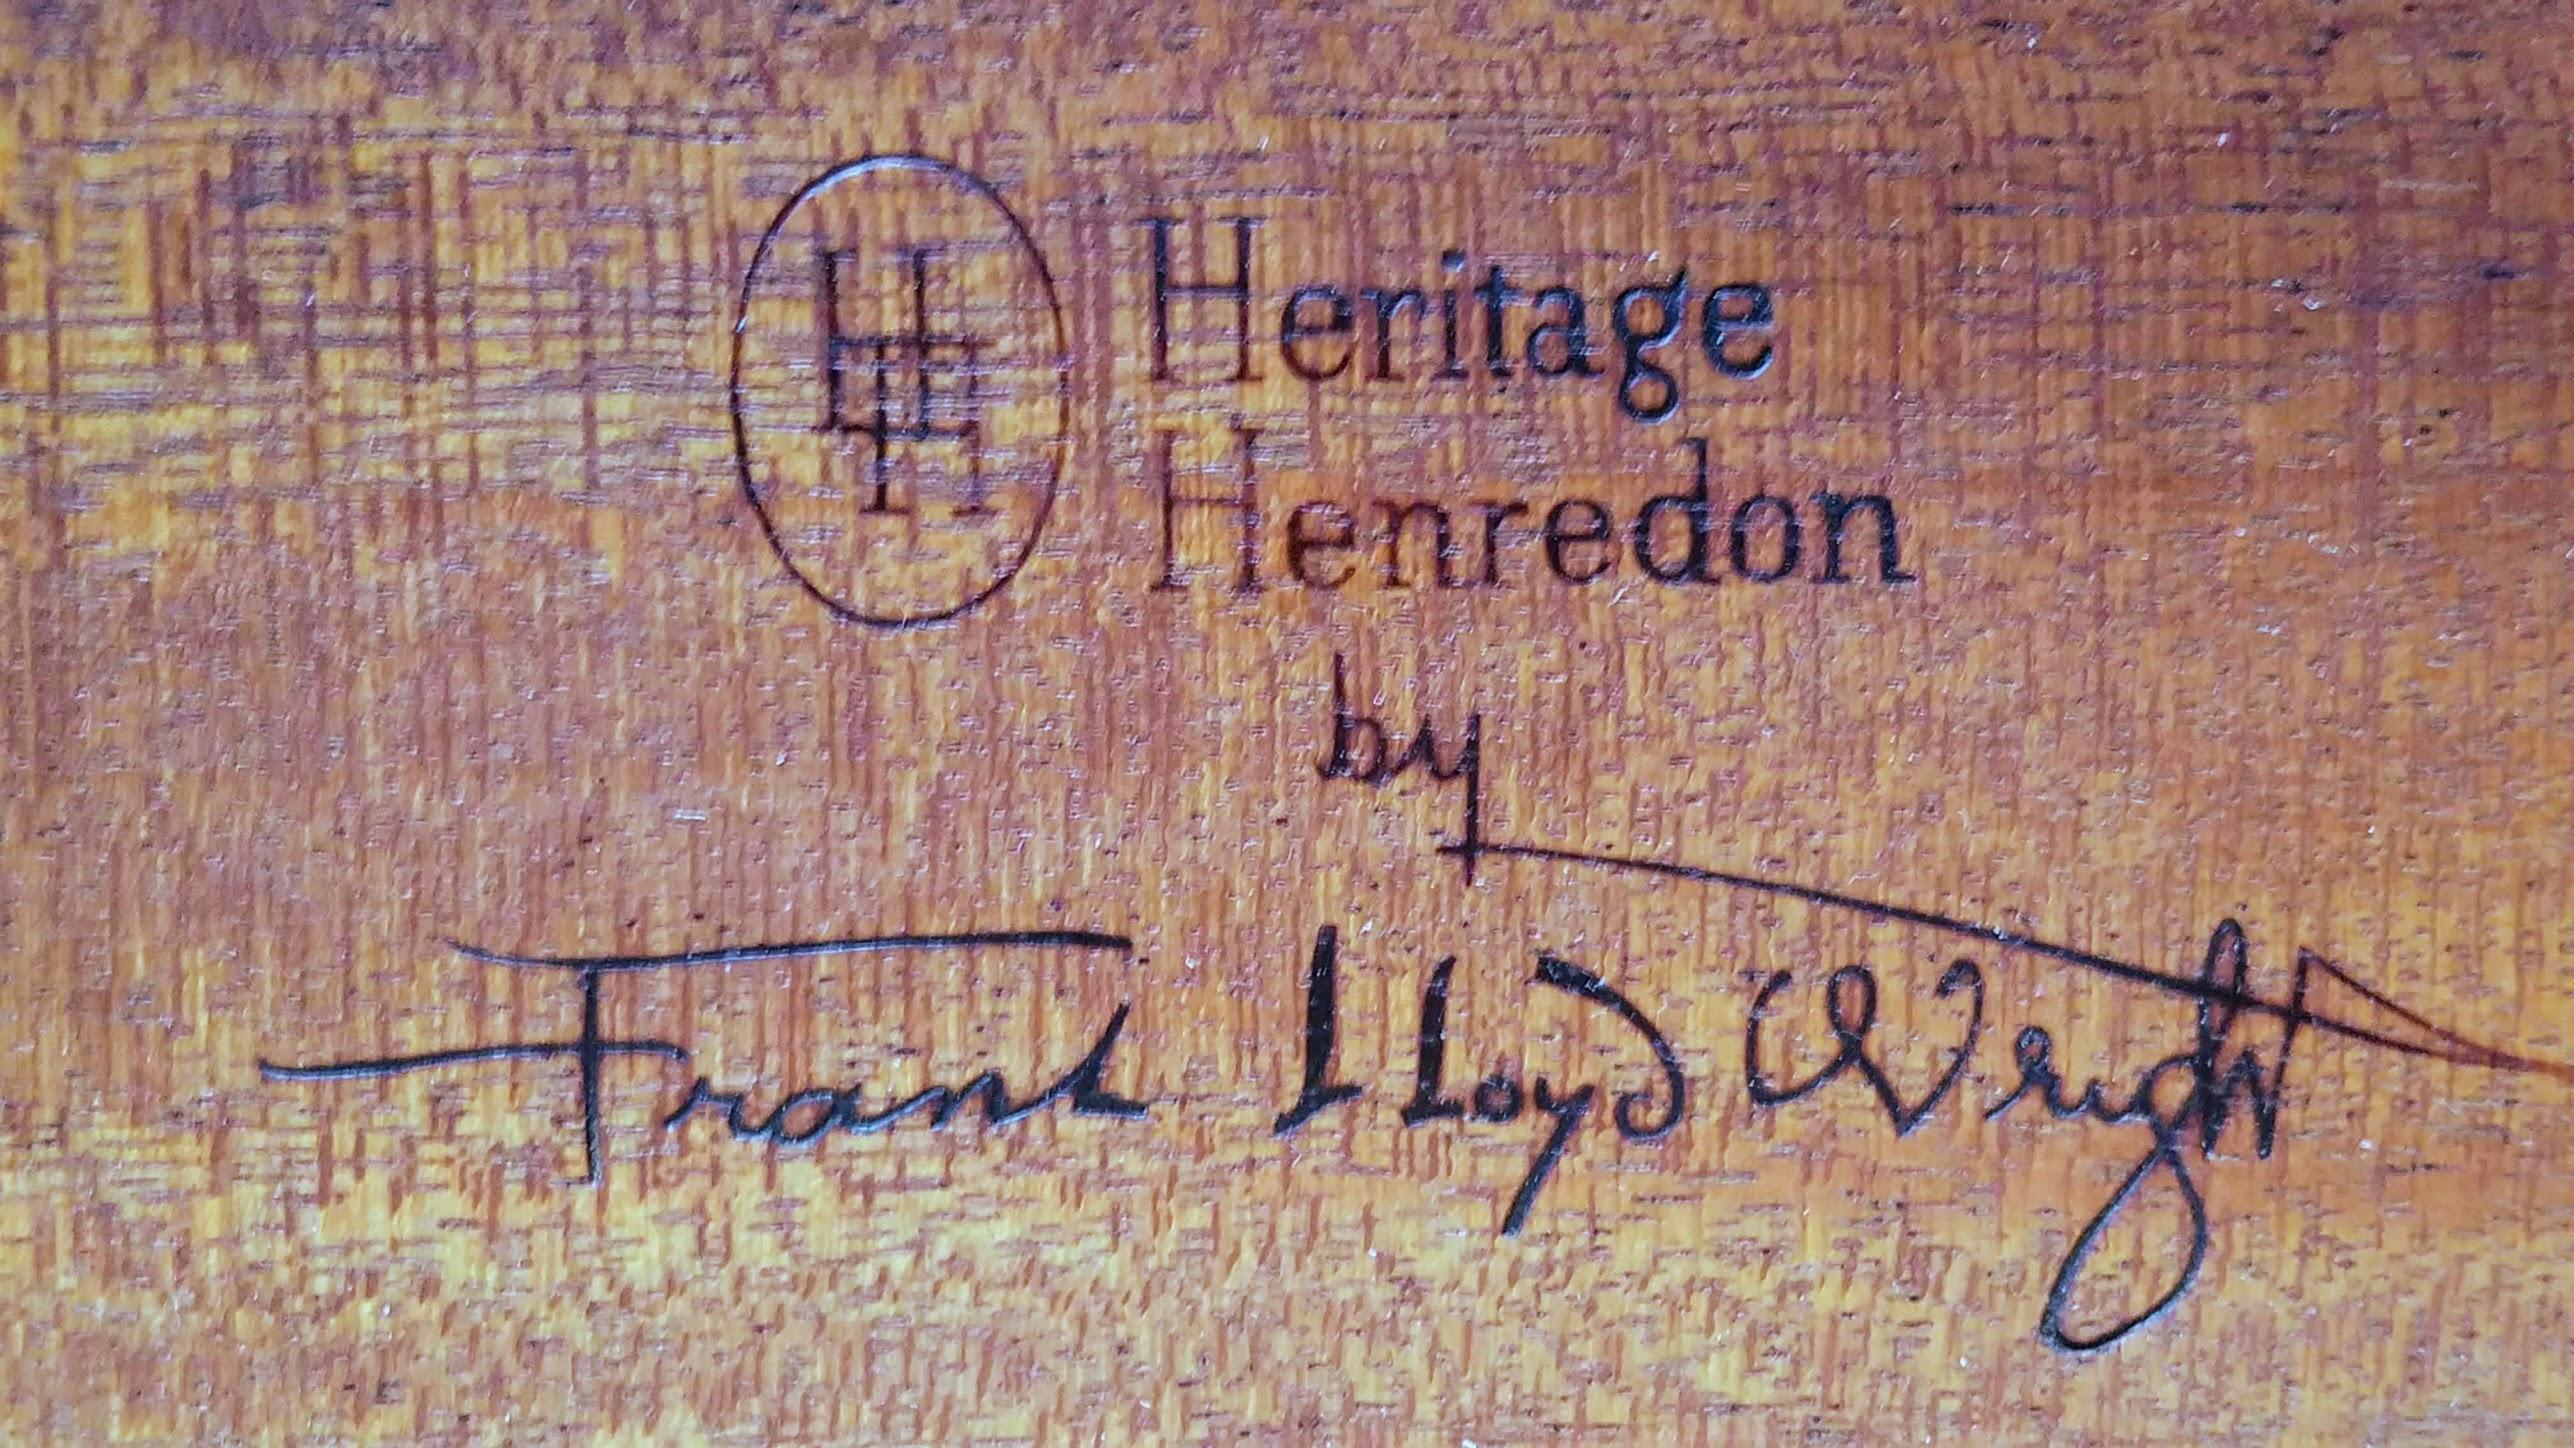 Rare Frank Lloyd Wright Pair of Mahogany End Tables/ Nightstands, Henredon, 1955 2